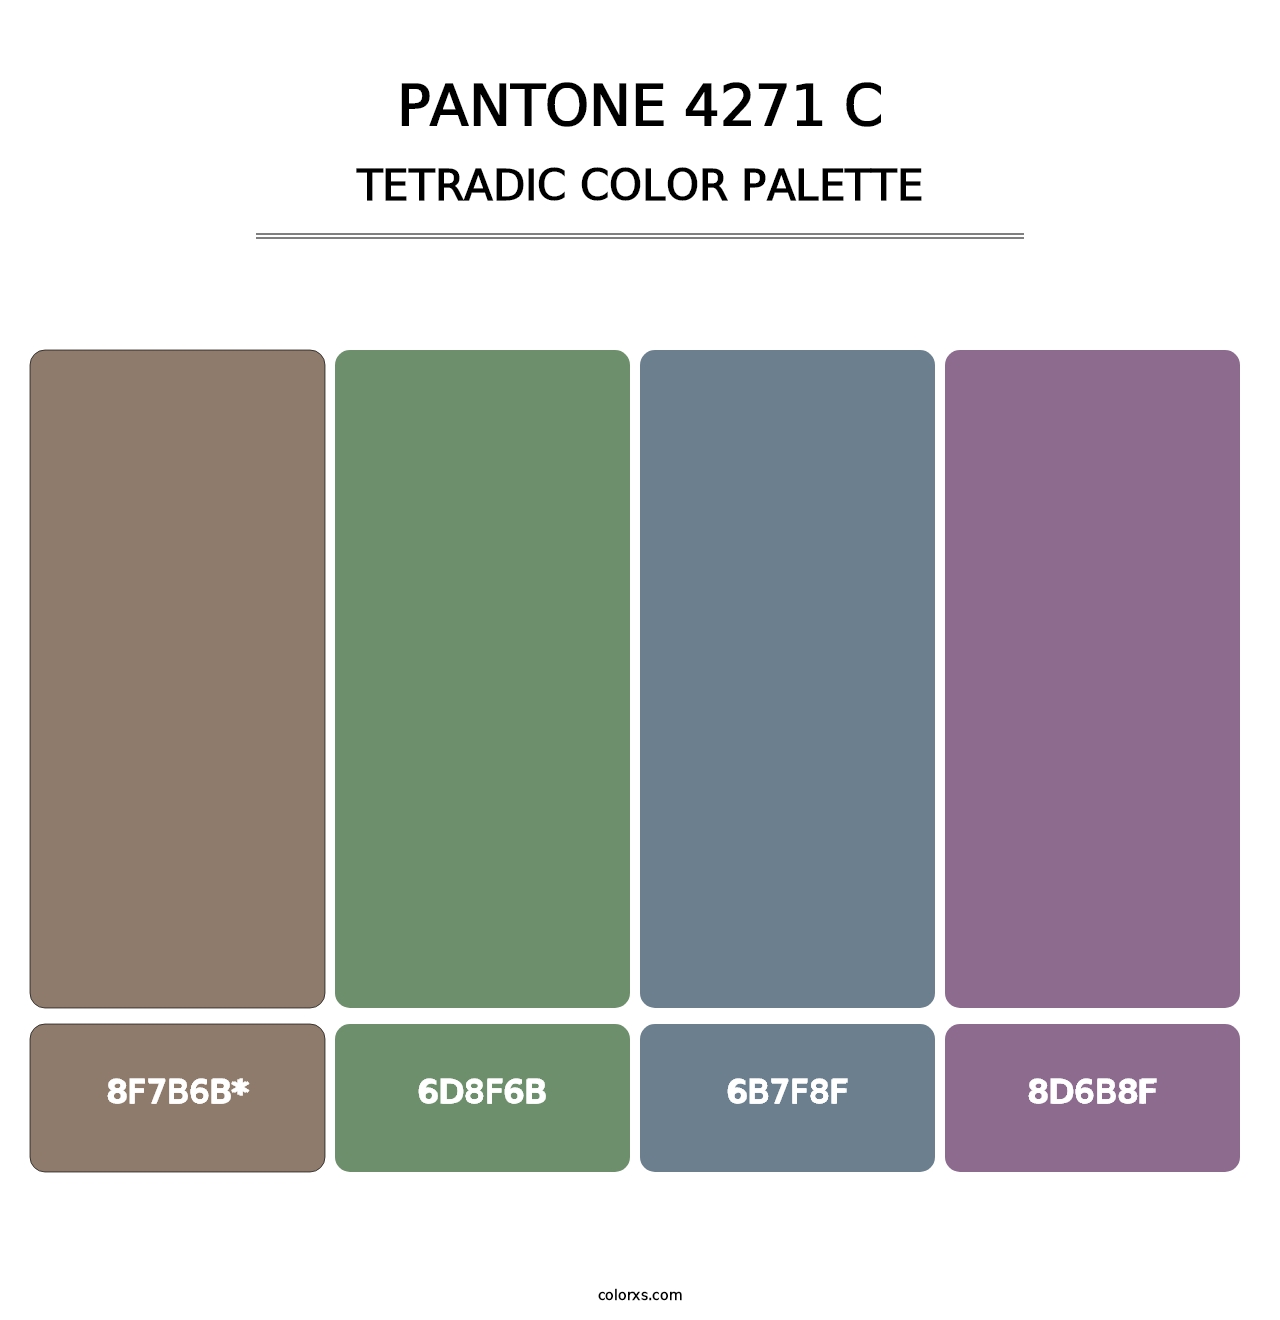 PANTONE 4271 C - Tetradic Color Palette